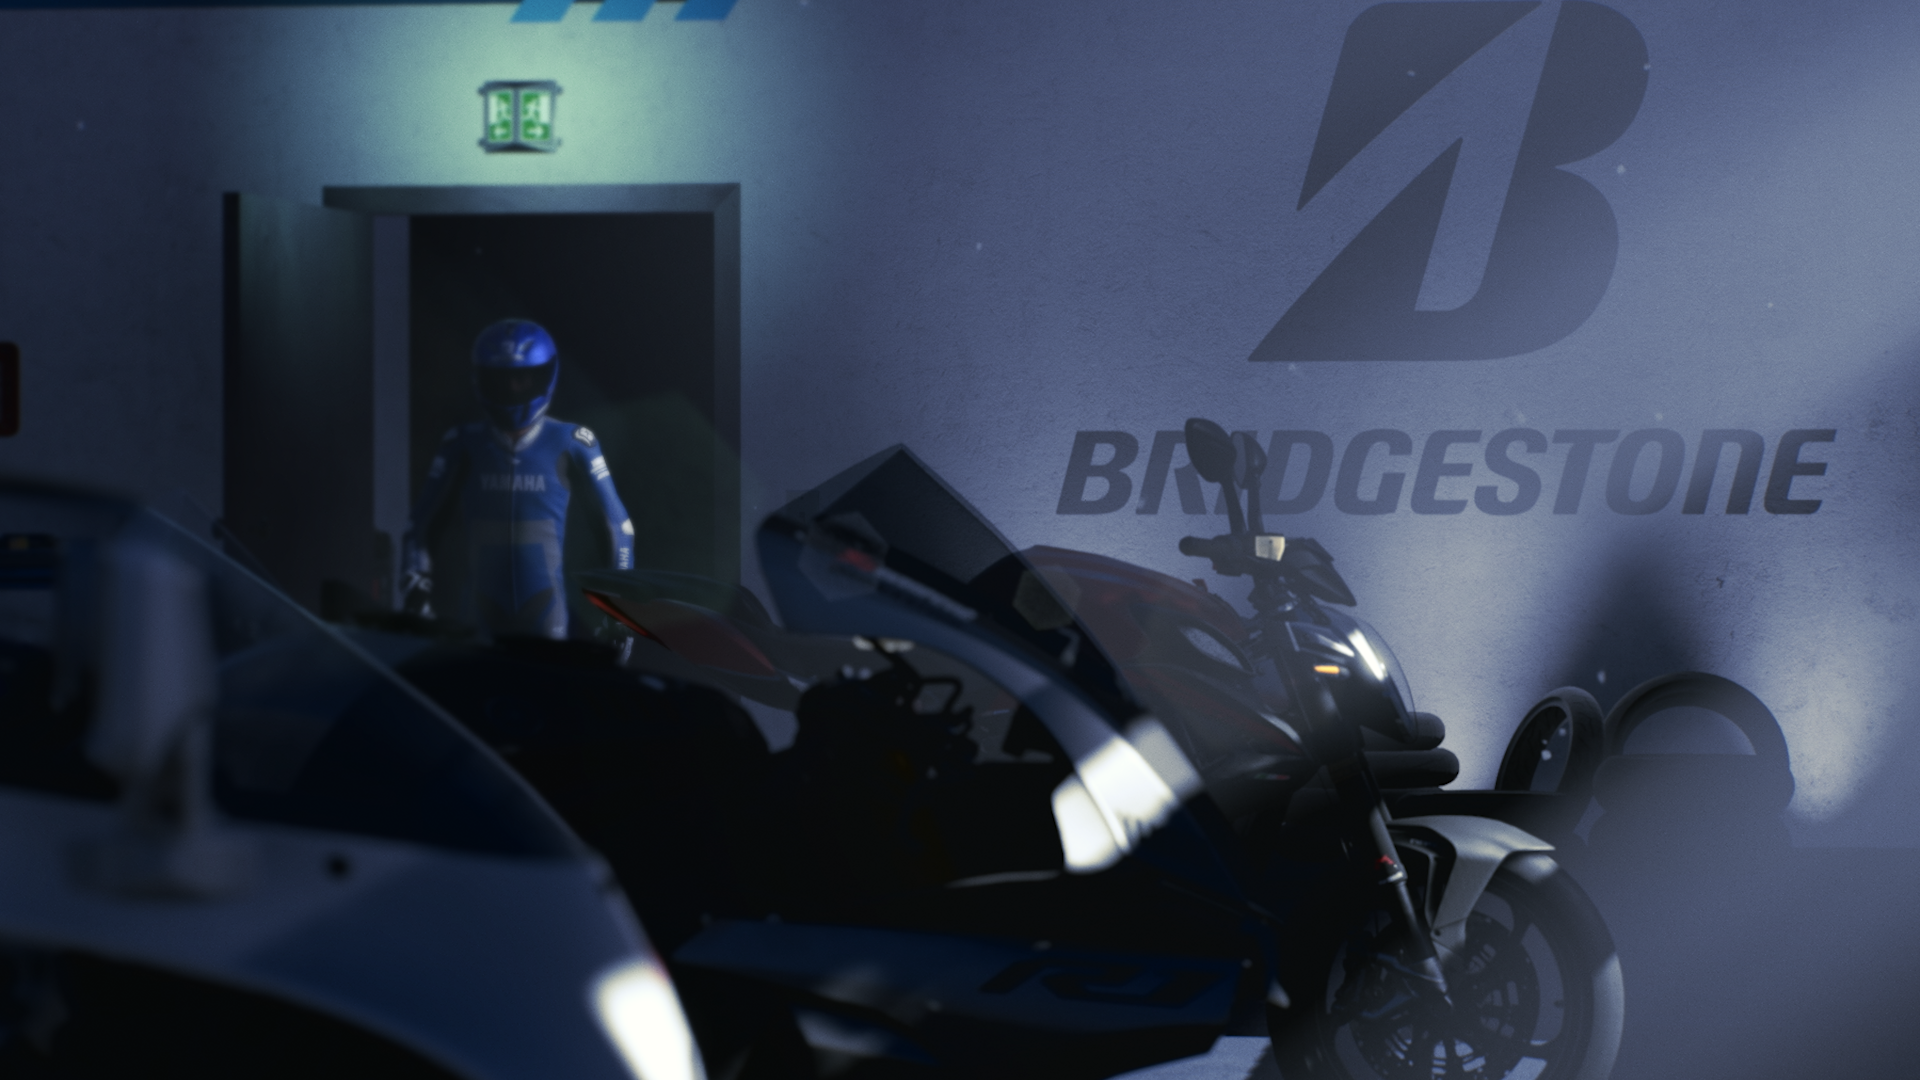 Bridgestone backs motorcycle position with RIDE 4 video game partnership